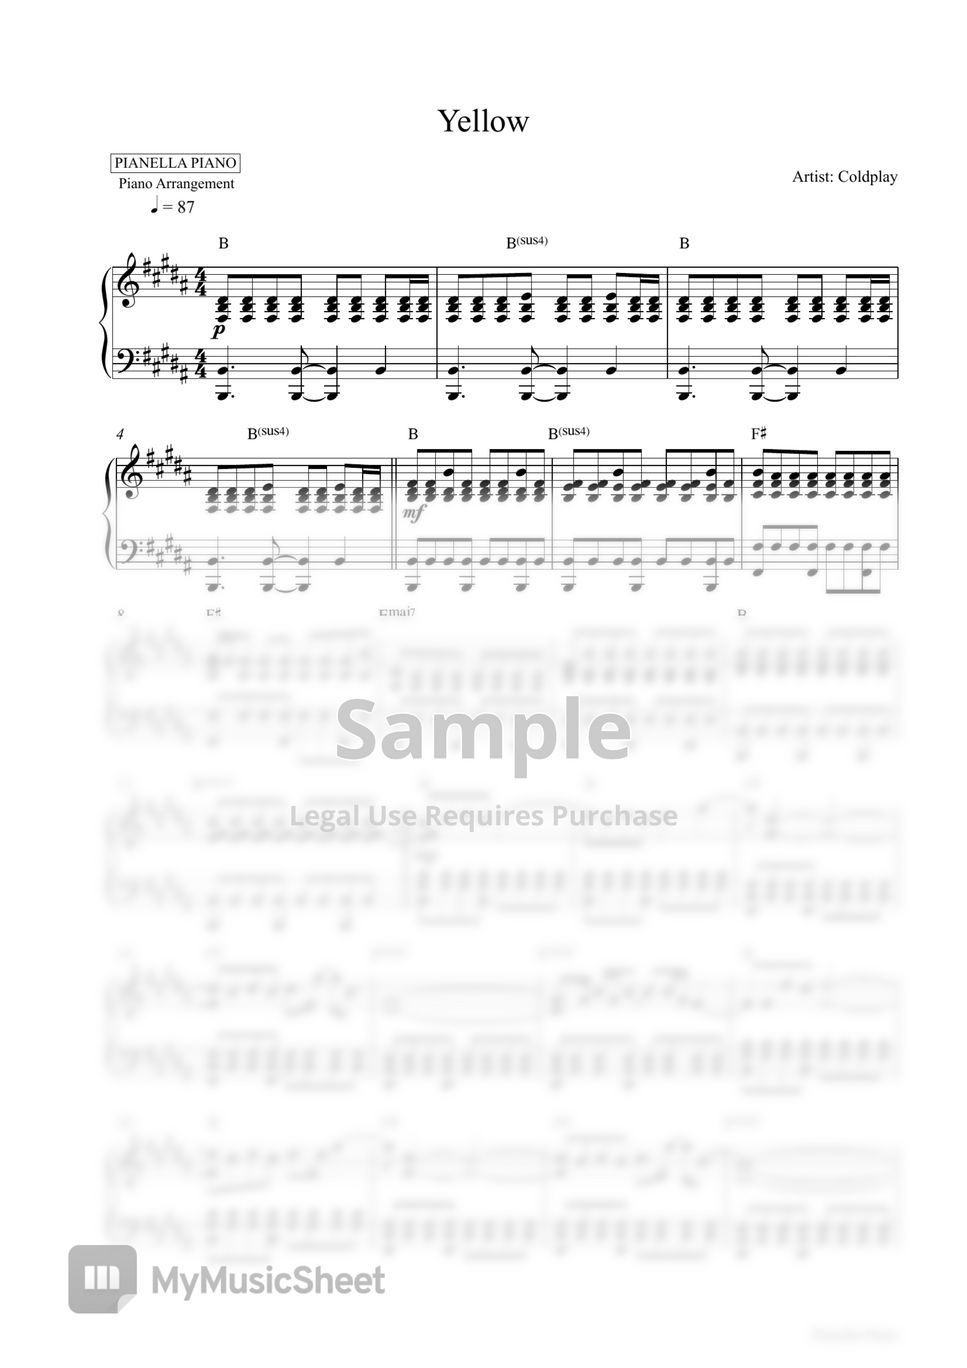 Coldplay - Yellow (Piano Sheet) by Pianella Piano